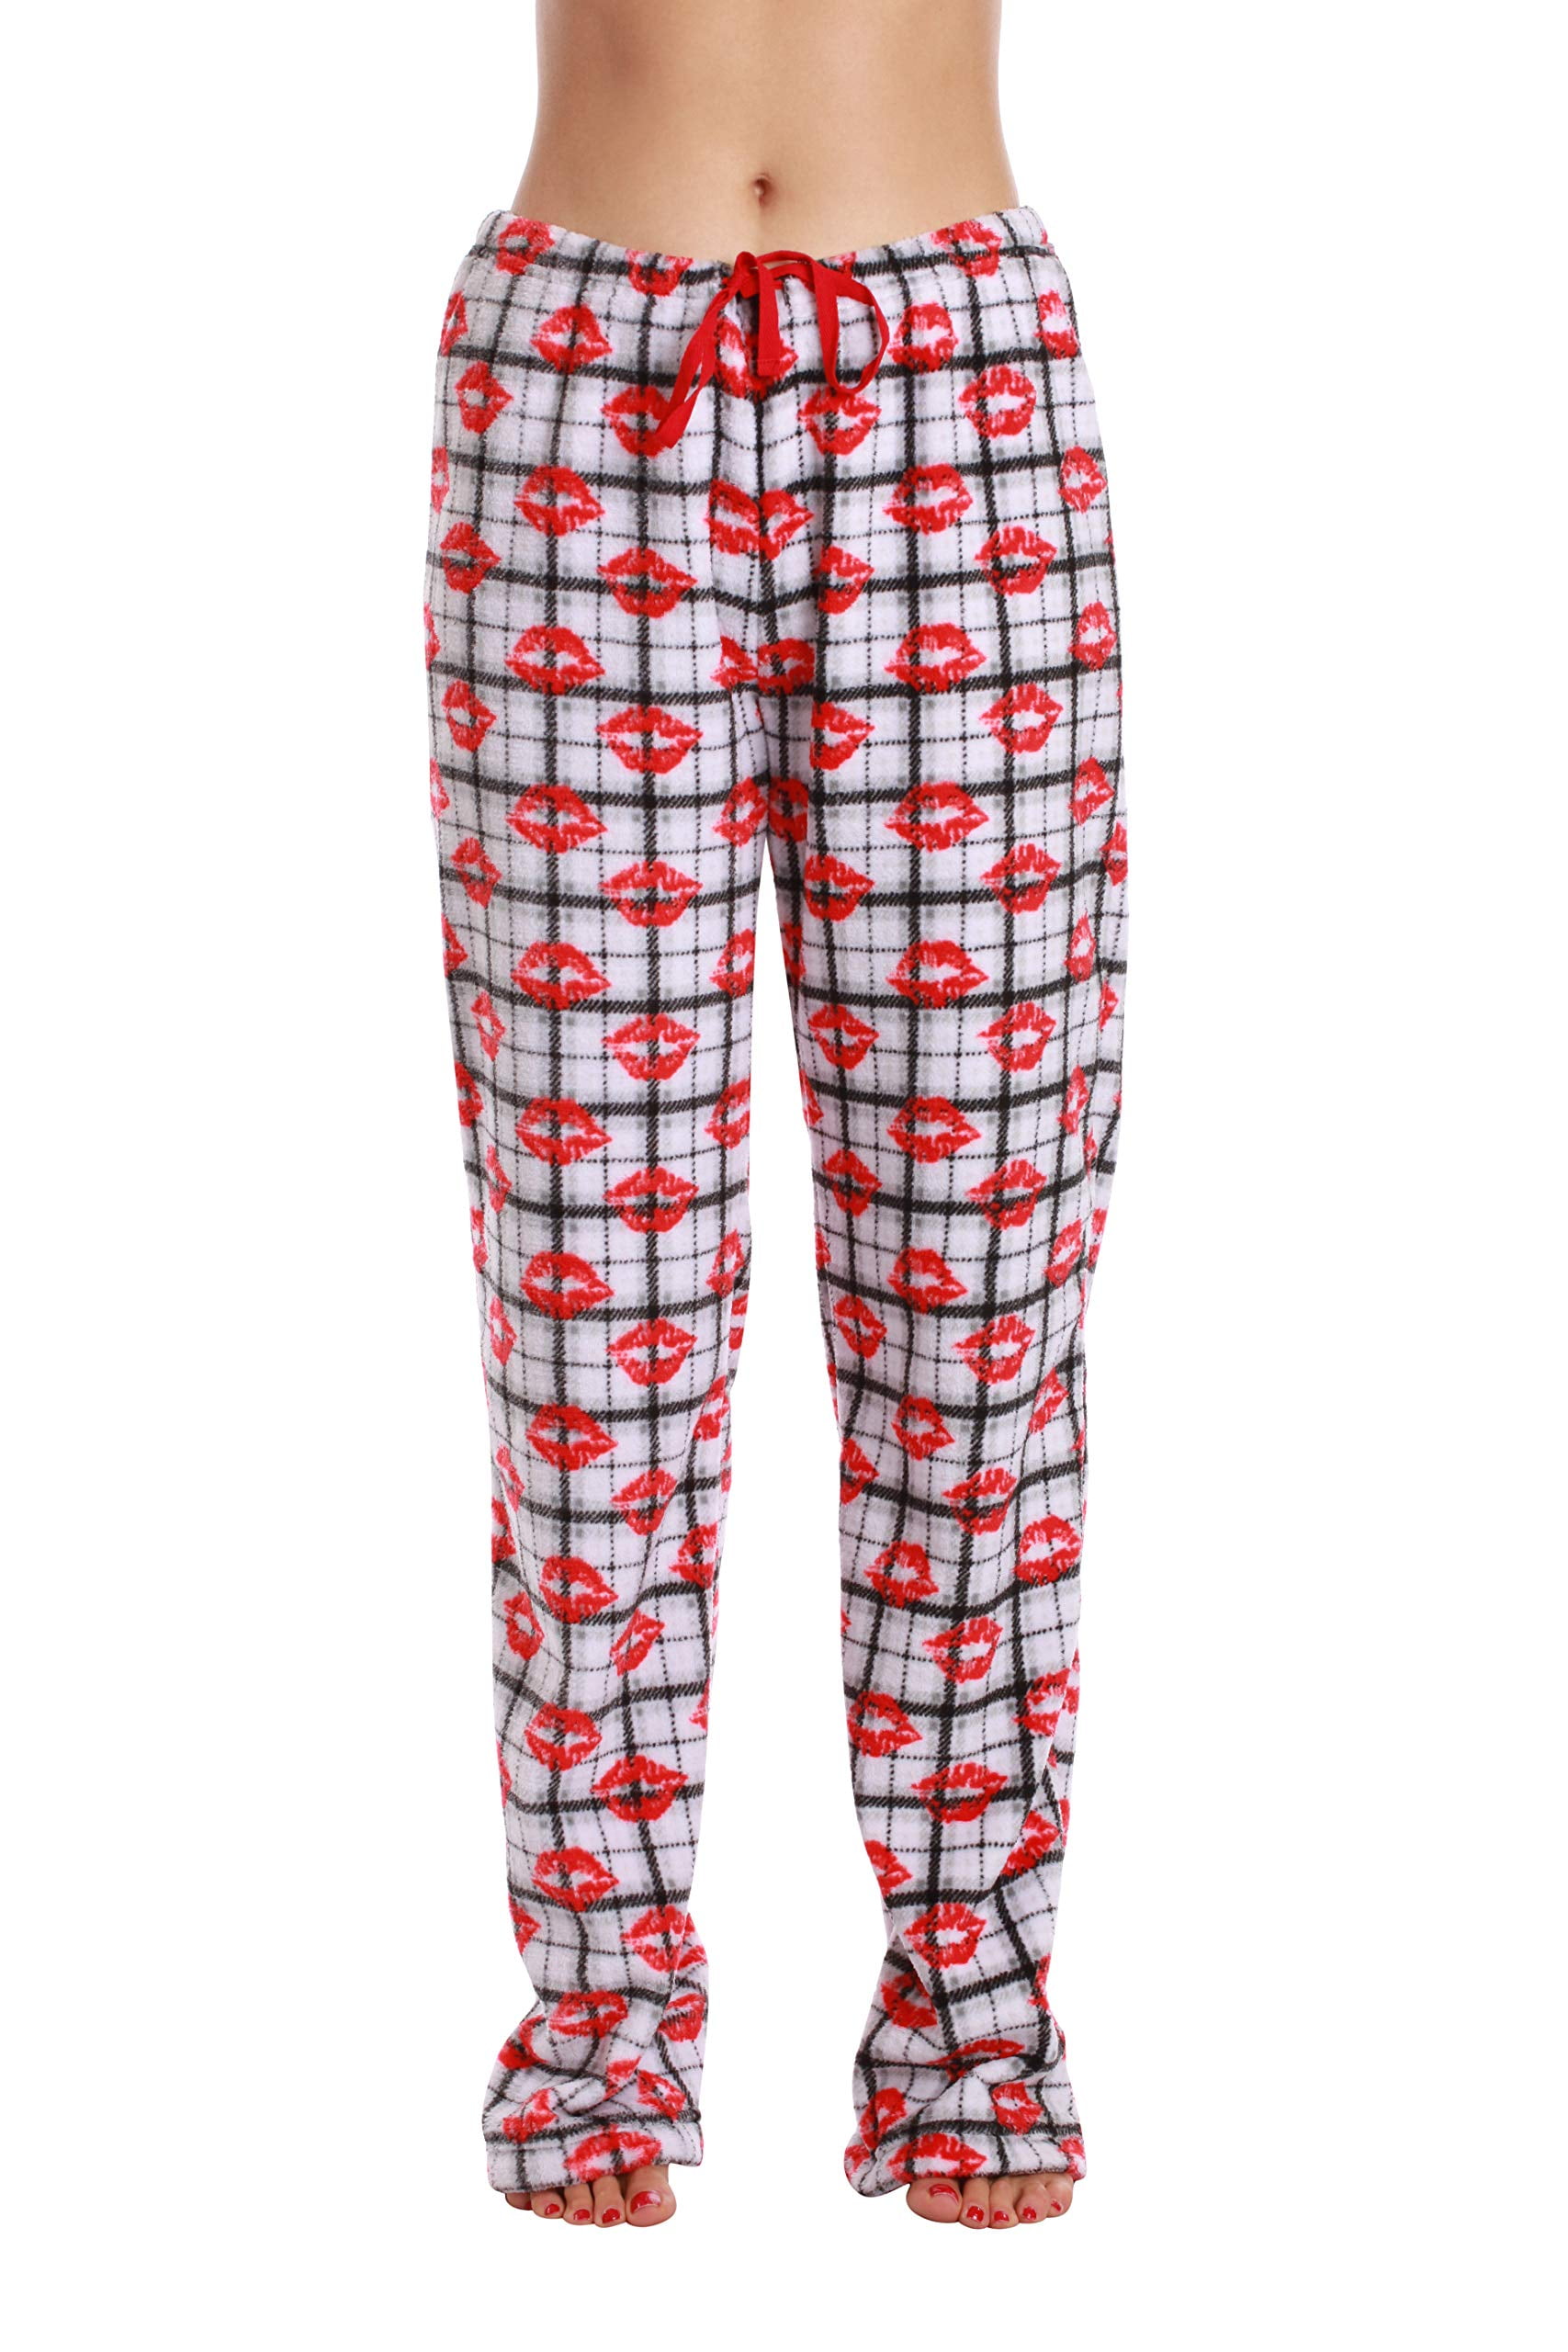 Just Love Plush Pajama Pants for Women - Petite to Plus Size Sleepwear  (Black - Leaf, 3X)